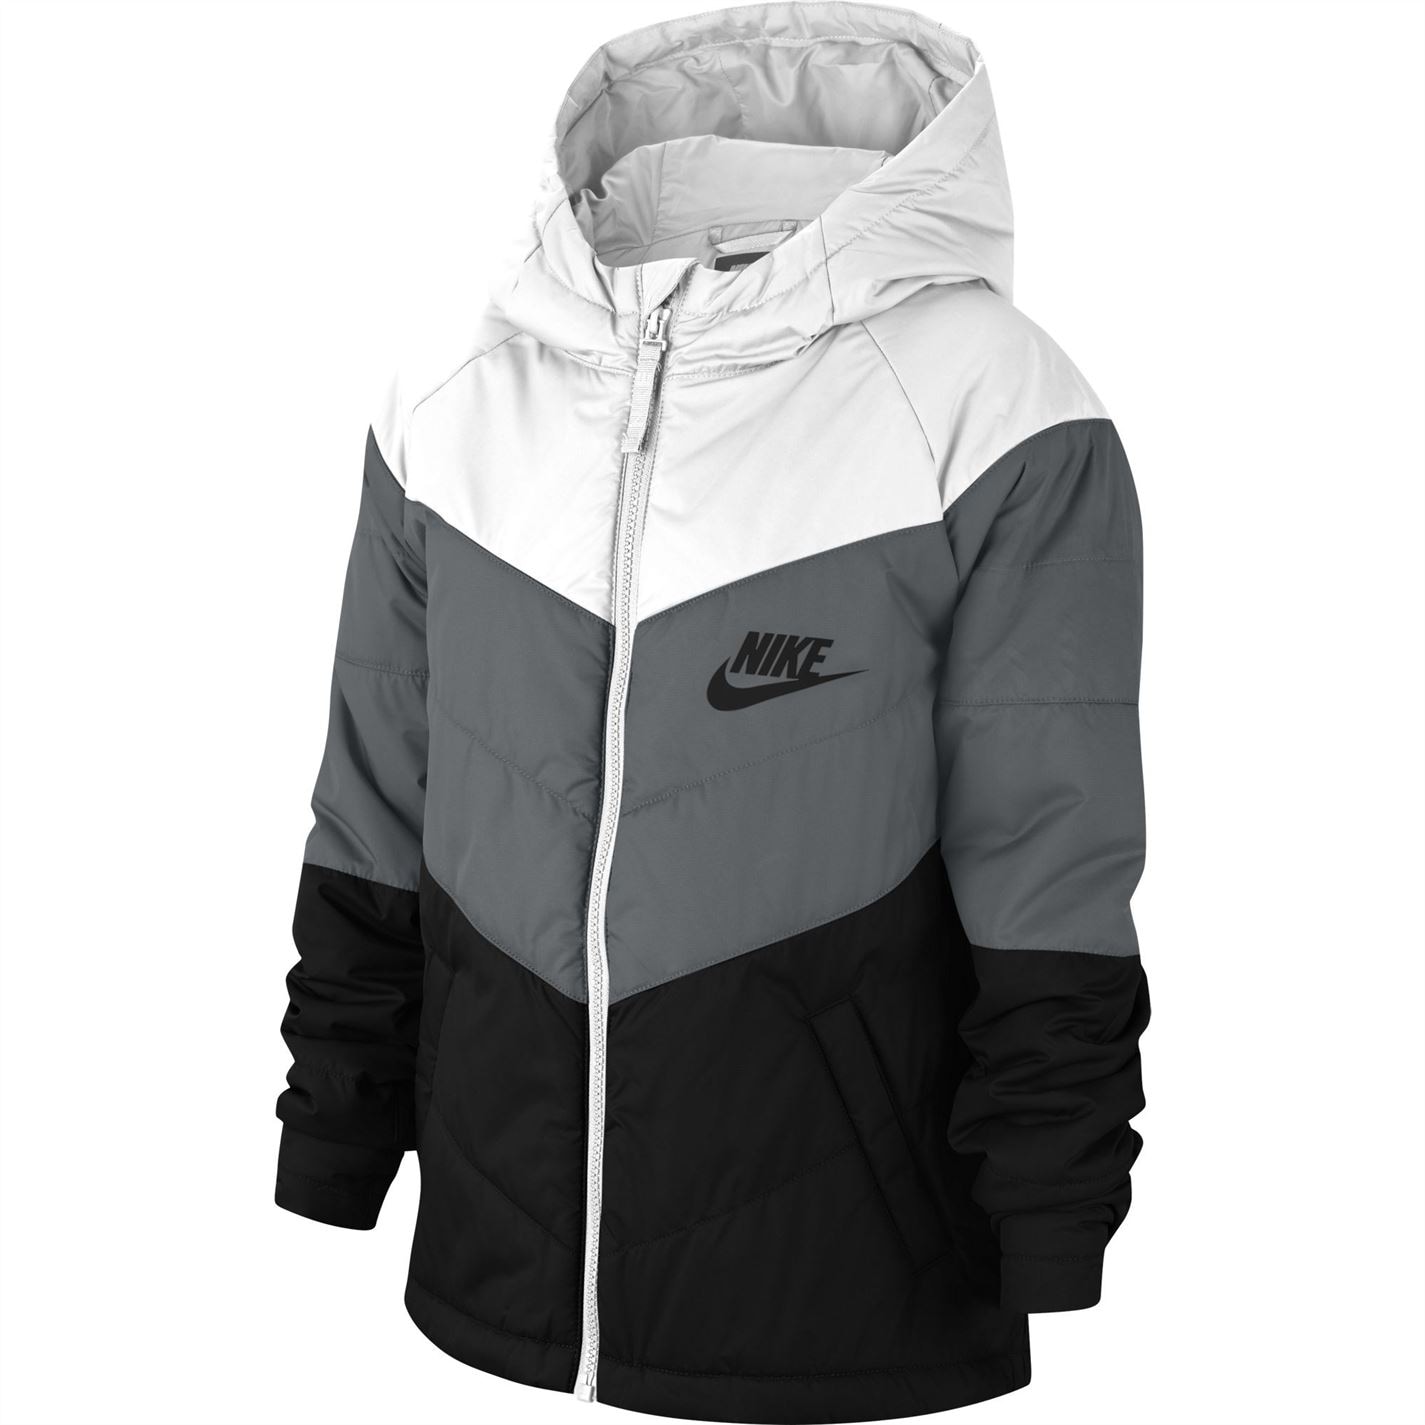 Jacheta Nike NSW Filled pentru baietei gri negru alb